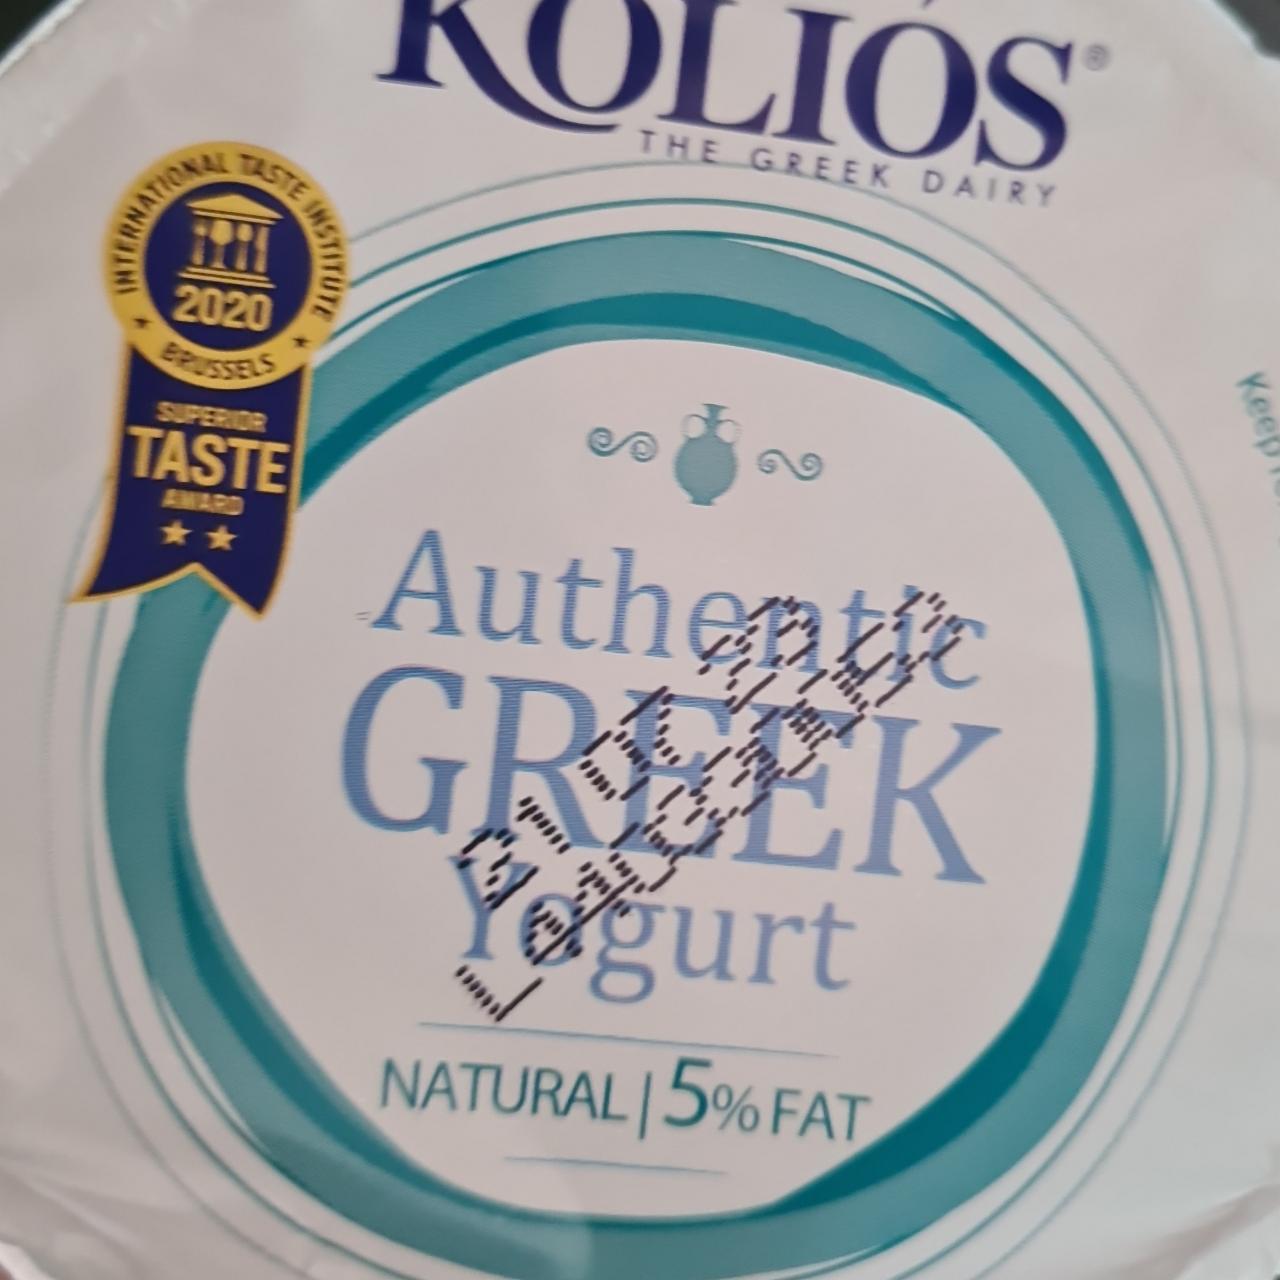 Fotografie - Authentic Greek yoghurt natural 5% fat Koliós